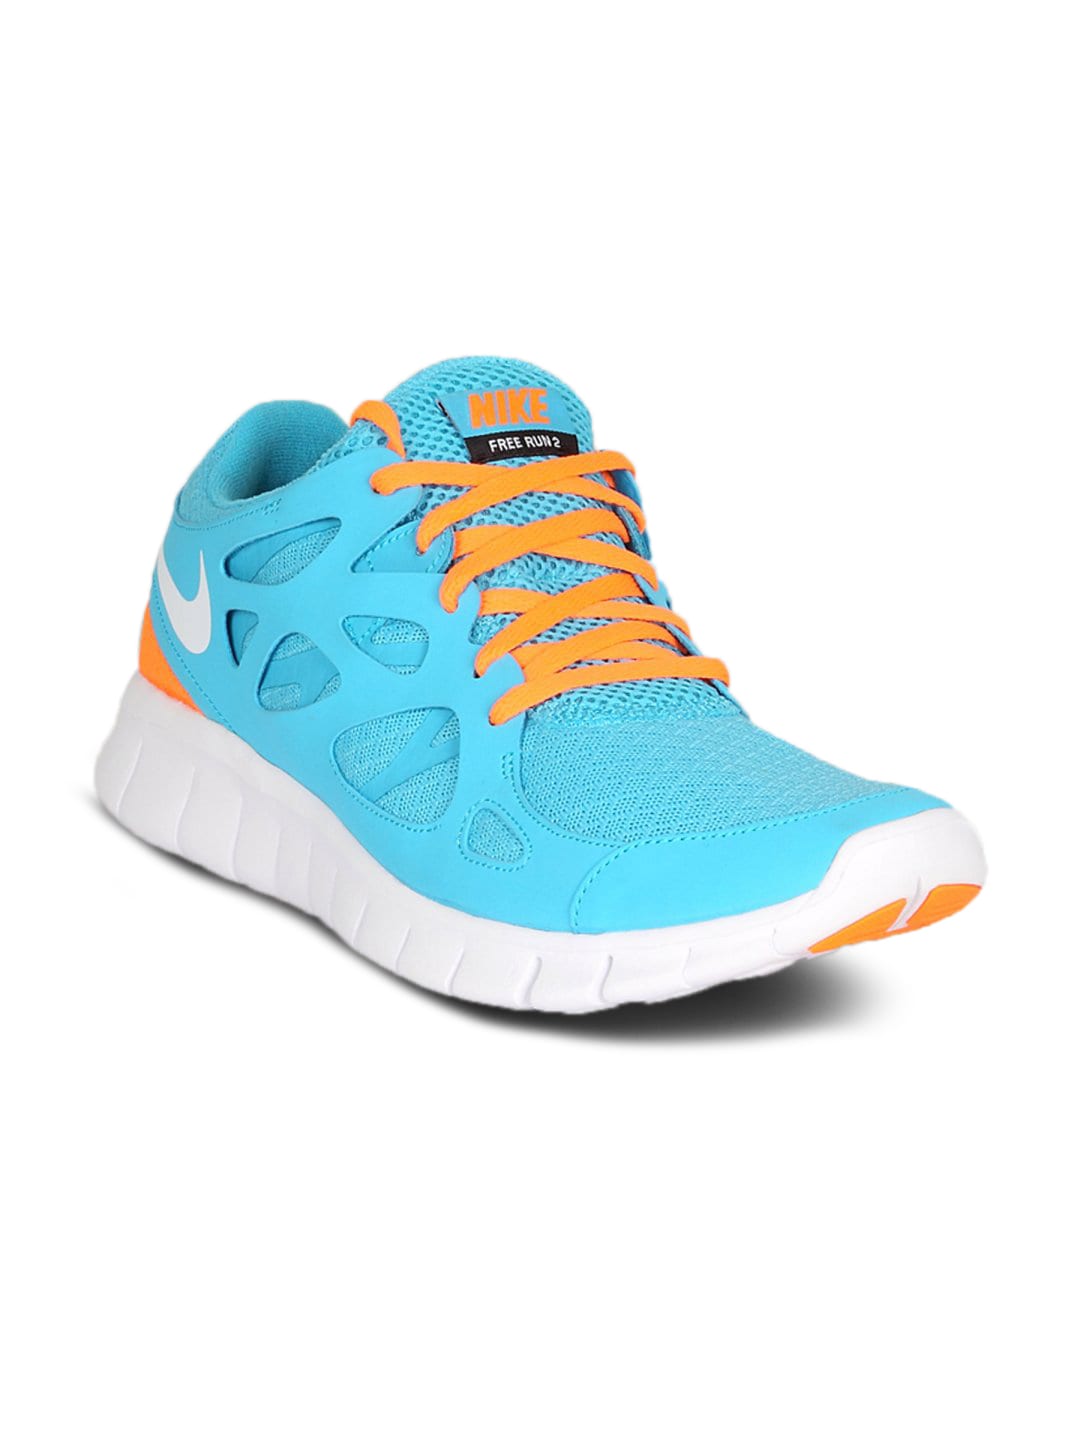 Nike Men's Free Run Blue Orange Shoe